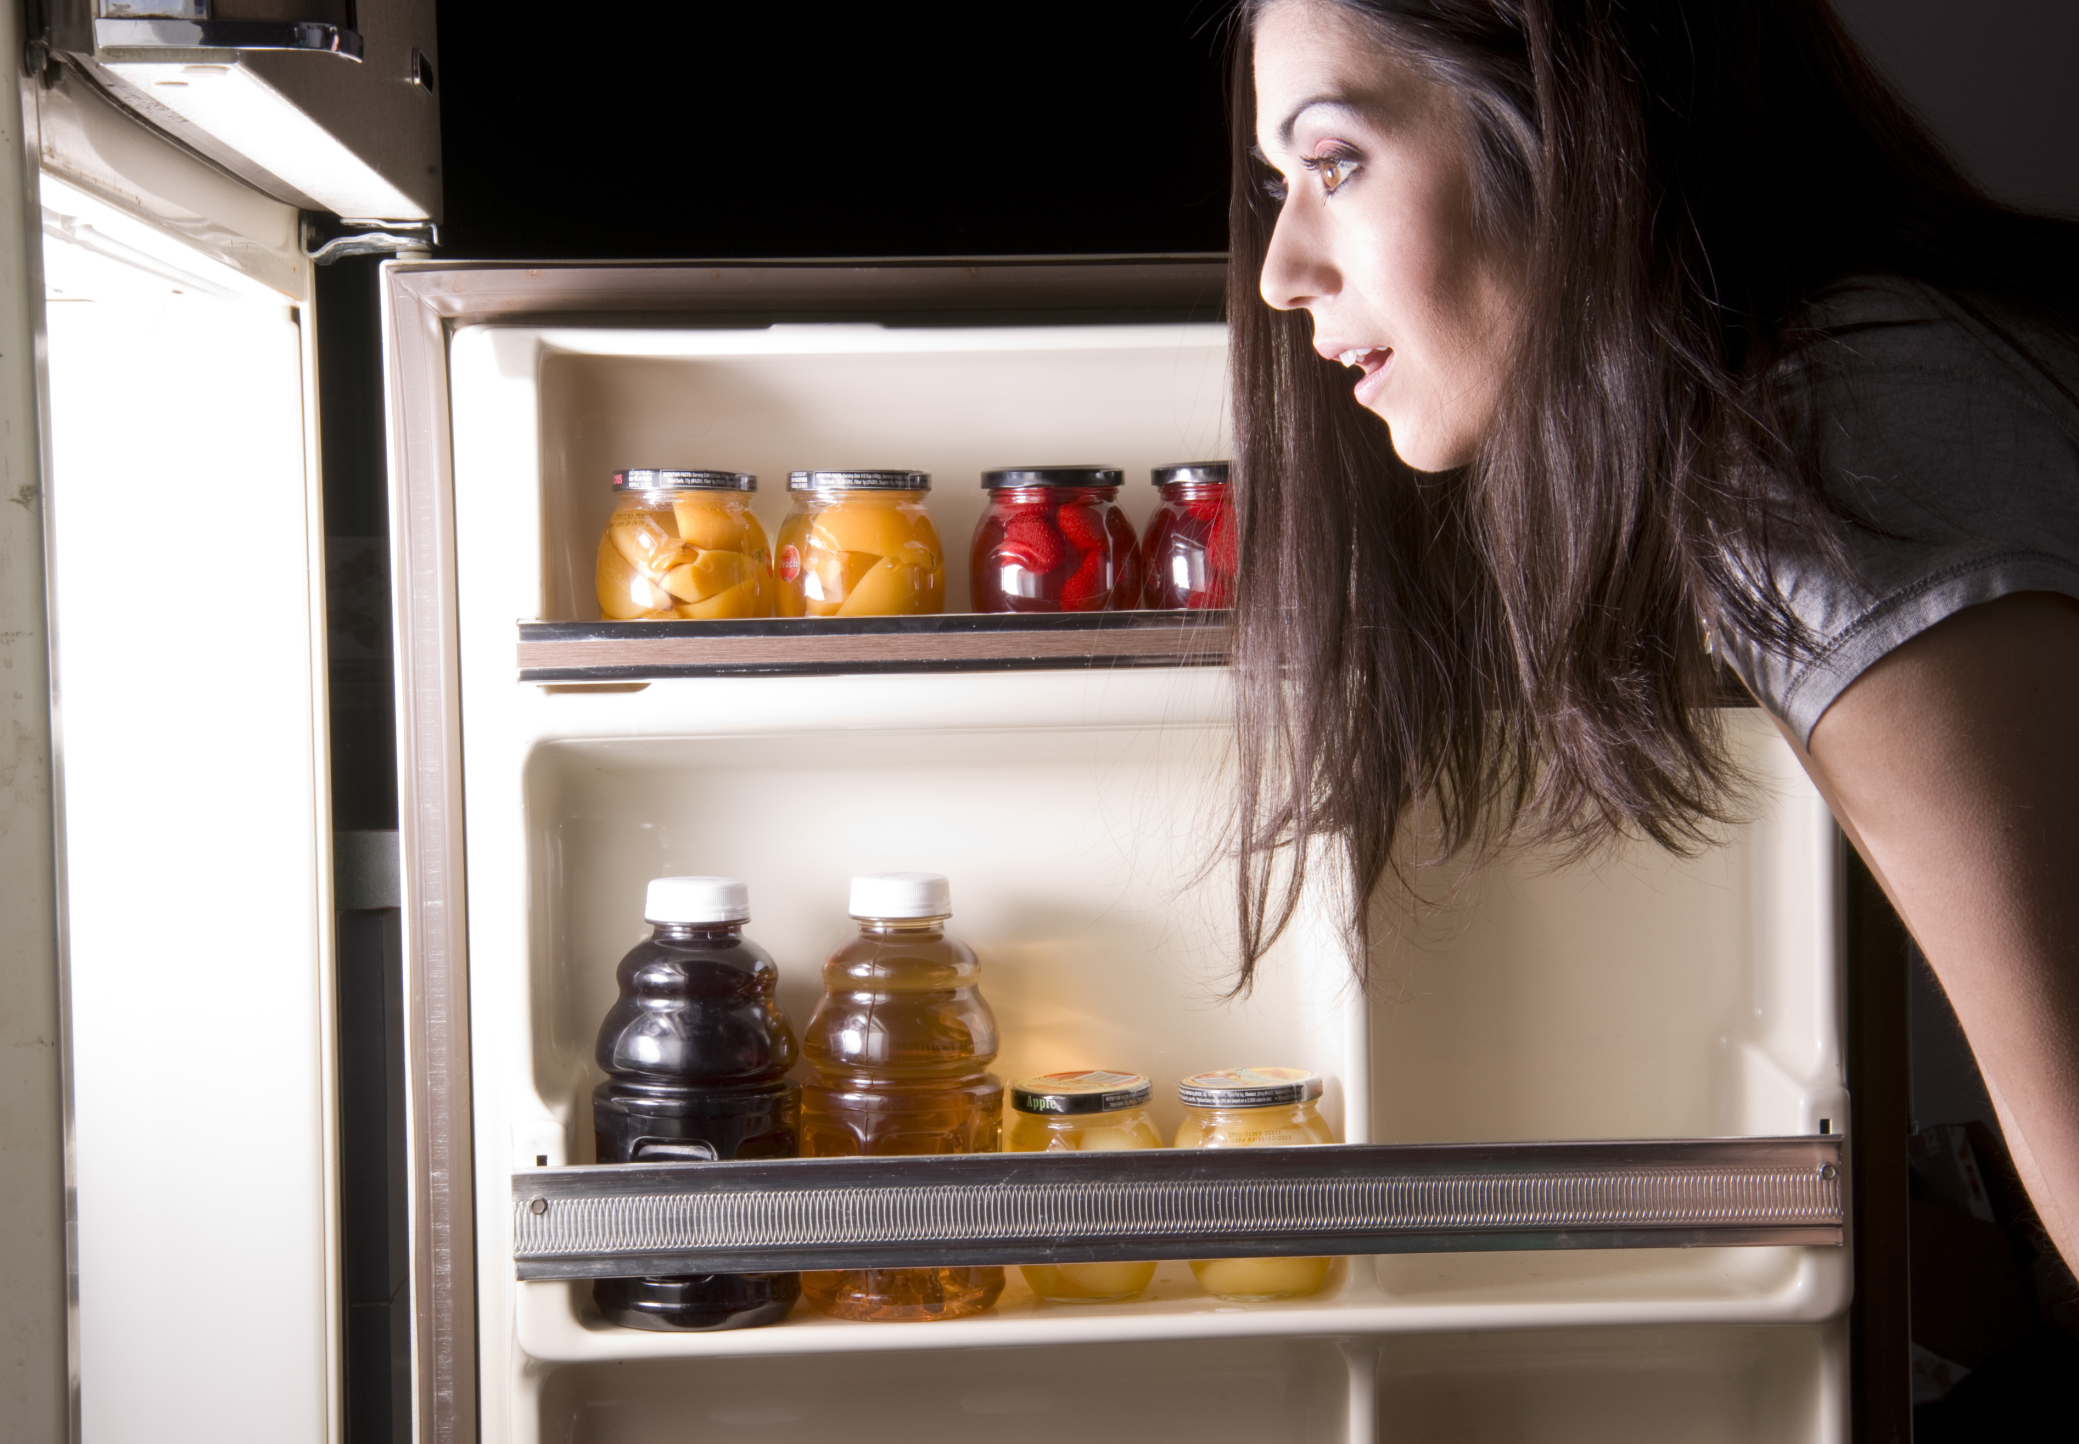 ÎÏÎ¿ÏÎ­Î»ÎµÏÎ¼Î± ÎµÎ¹ÎºÏÎ½Î±Ï Î³Î¹Î± woman fridge